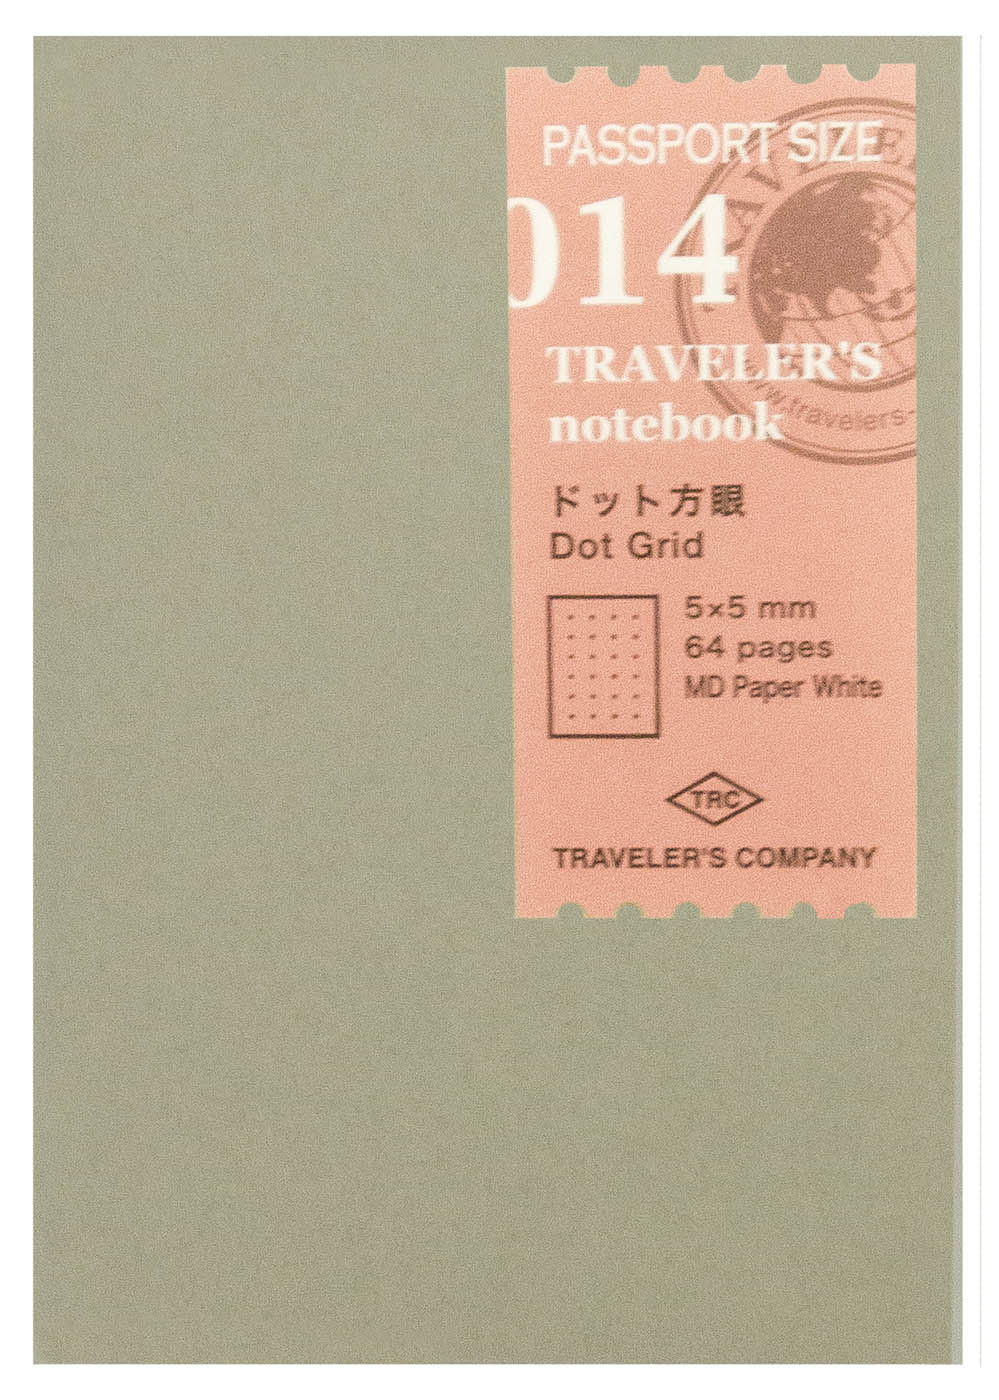 Traveler's Company 014 Passport Sized Refill - Dot Grid